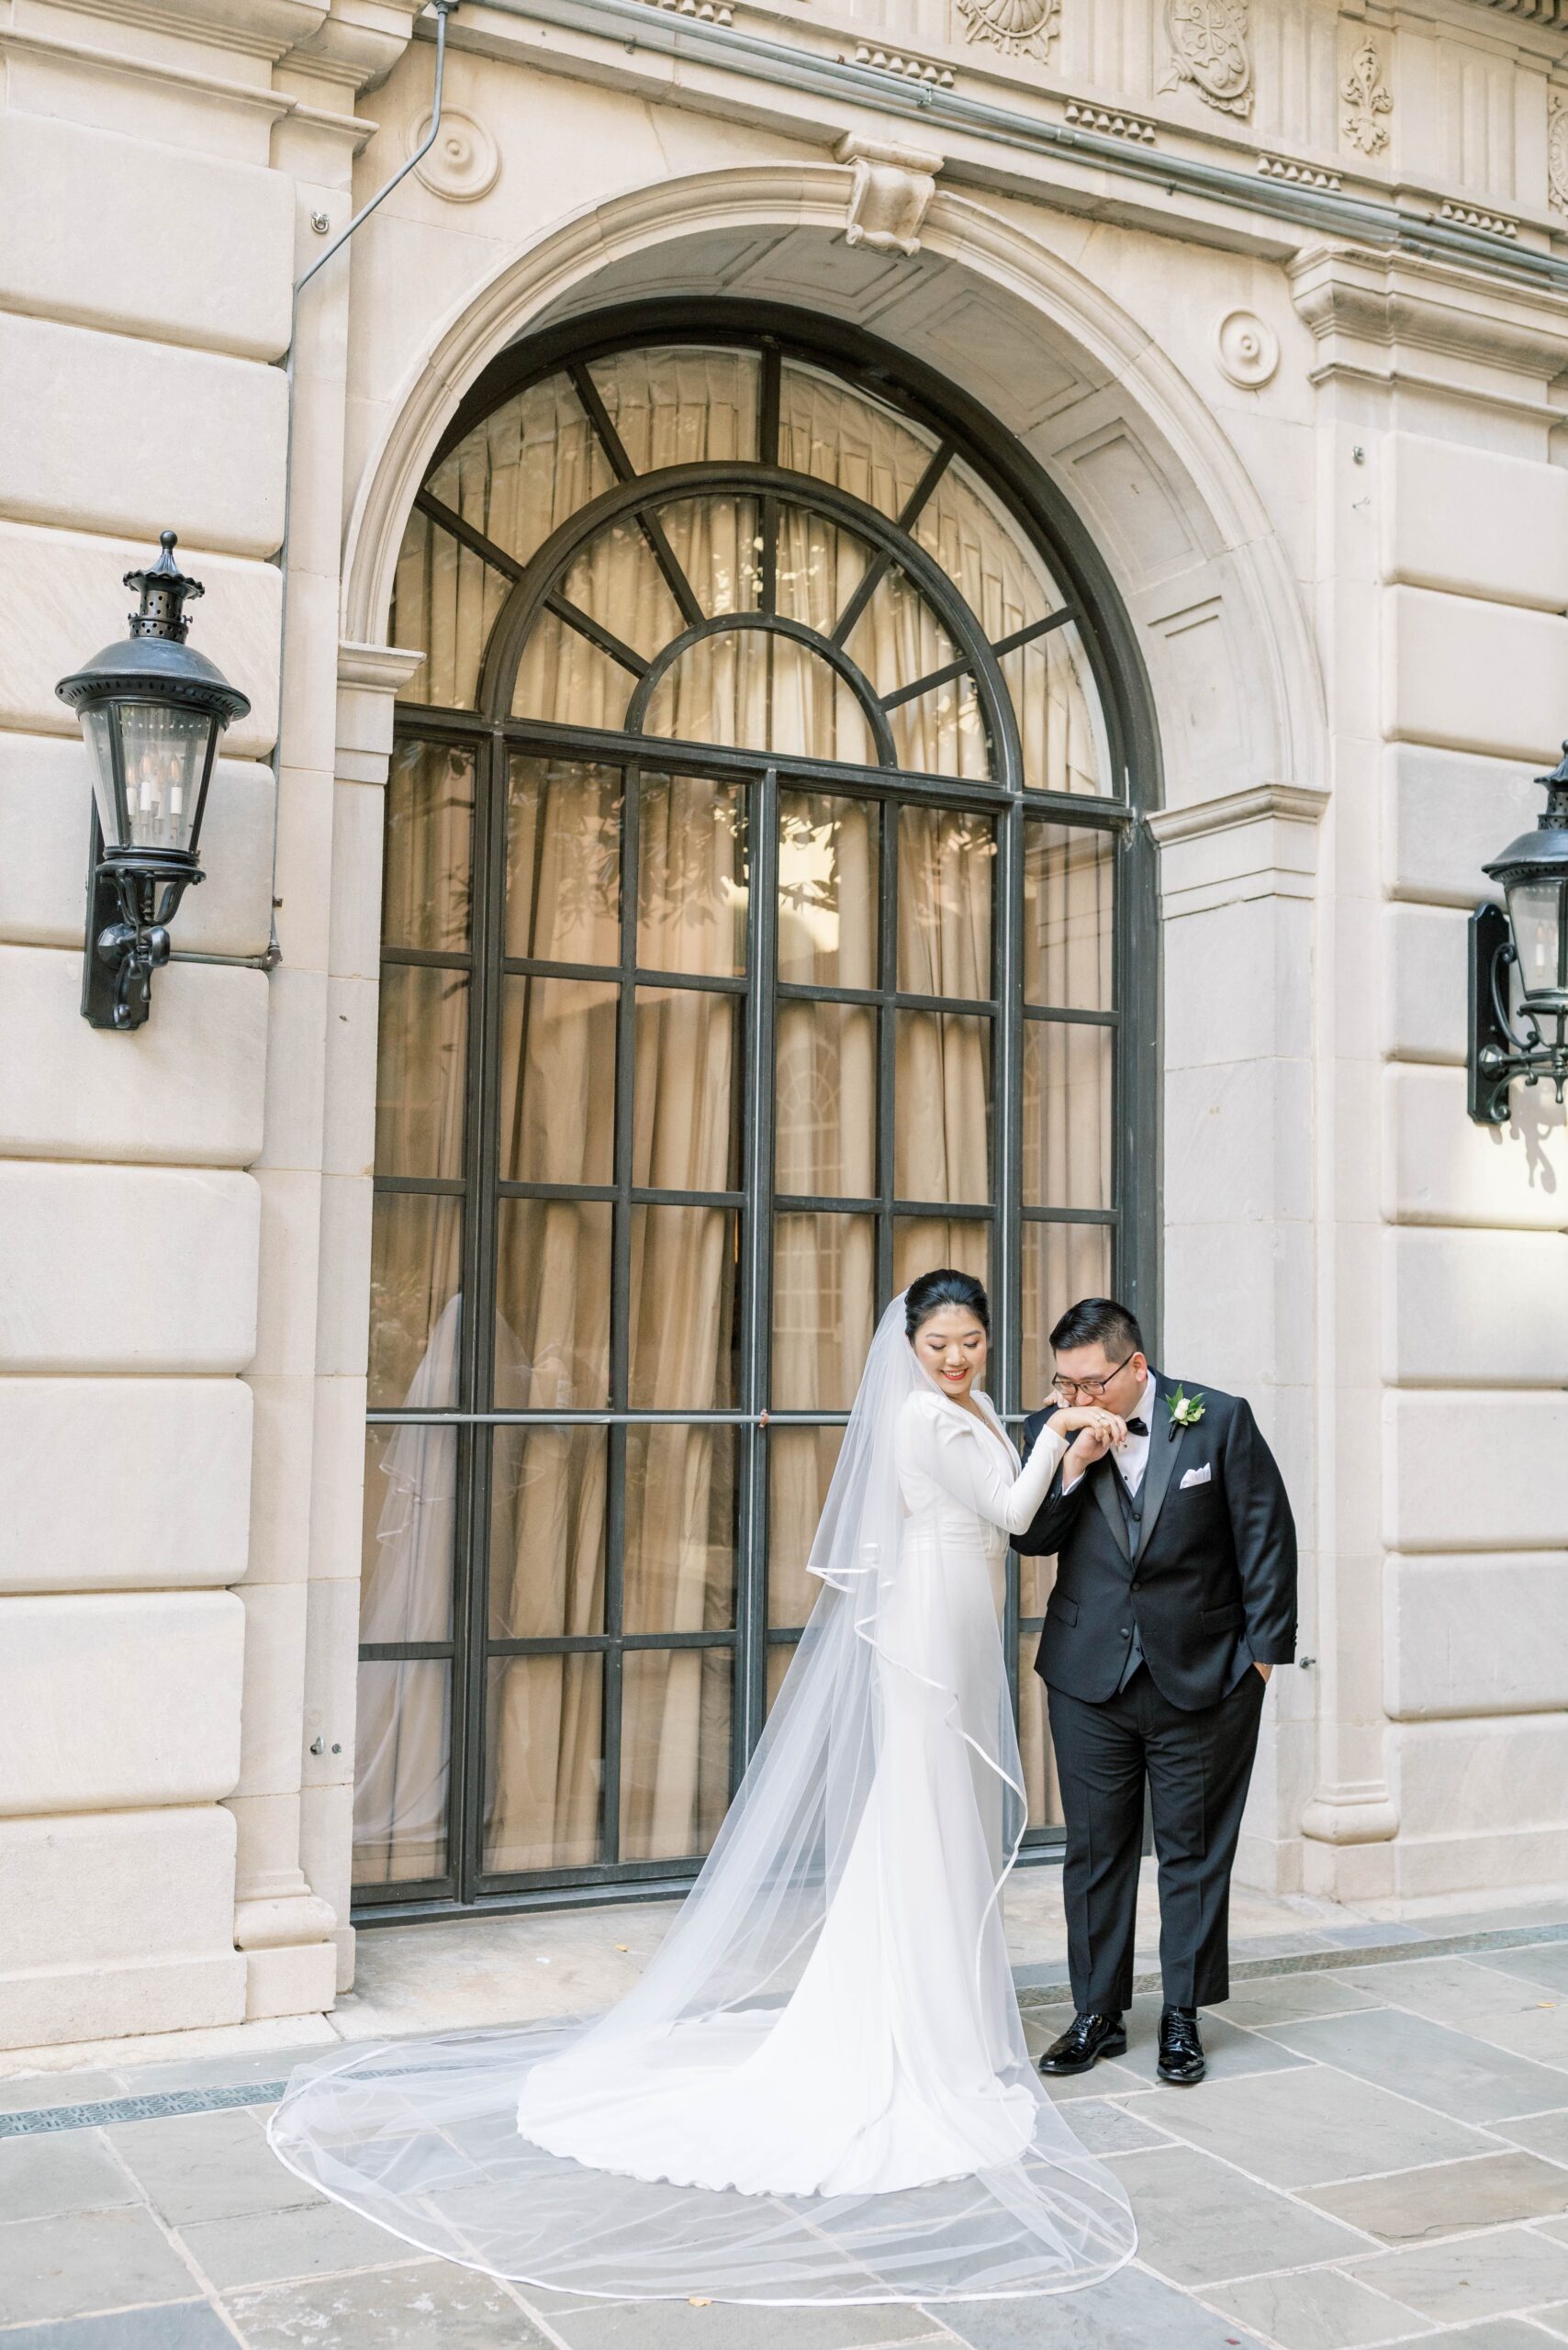 An elegant, classic black tie wedding at the St. Regis hotel in downtown Washington, DC.